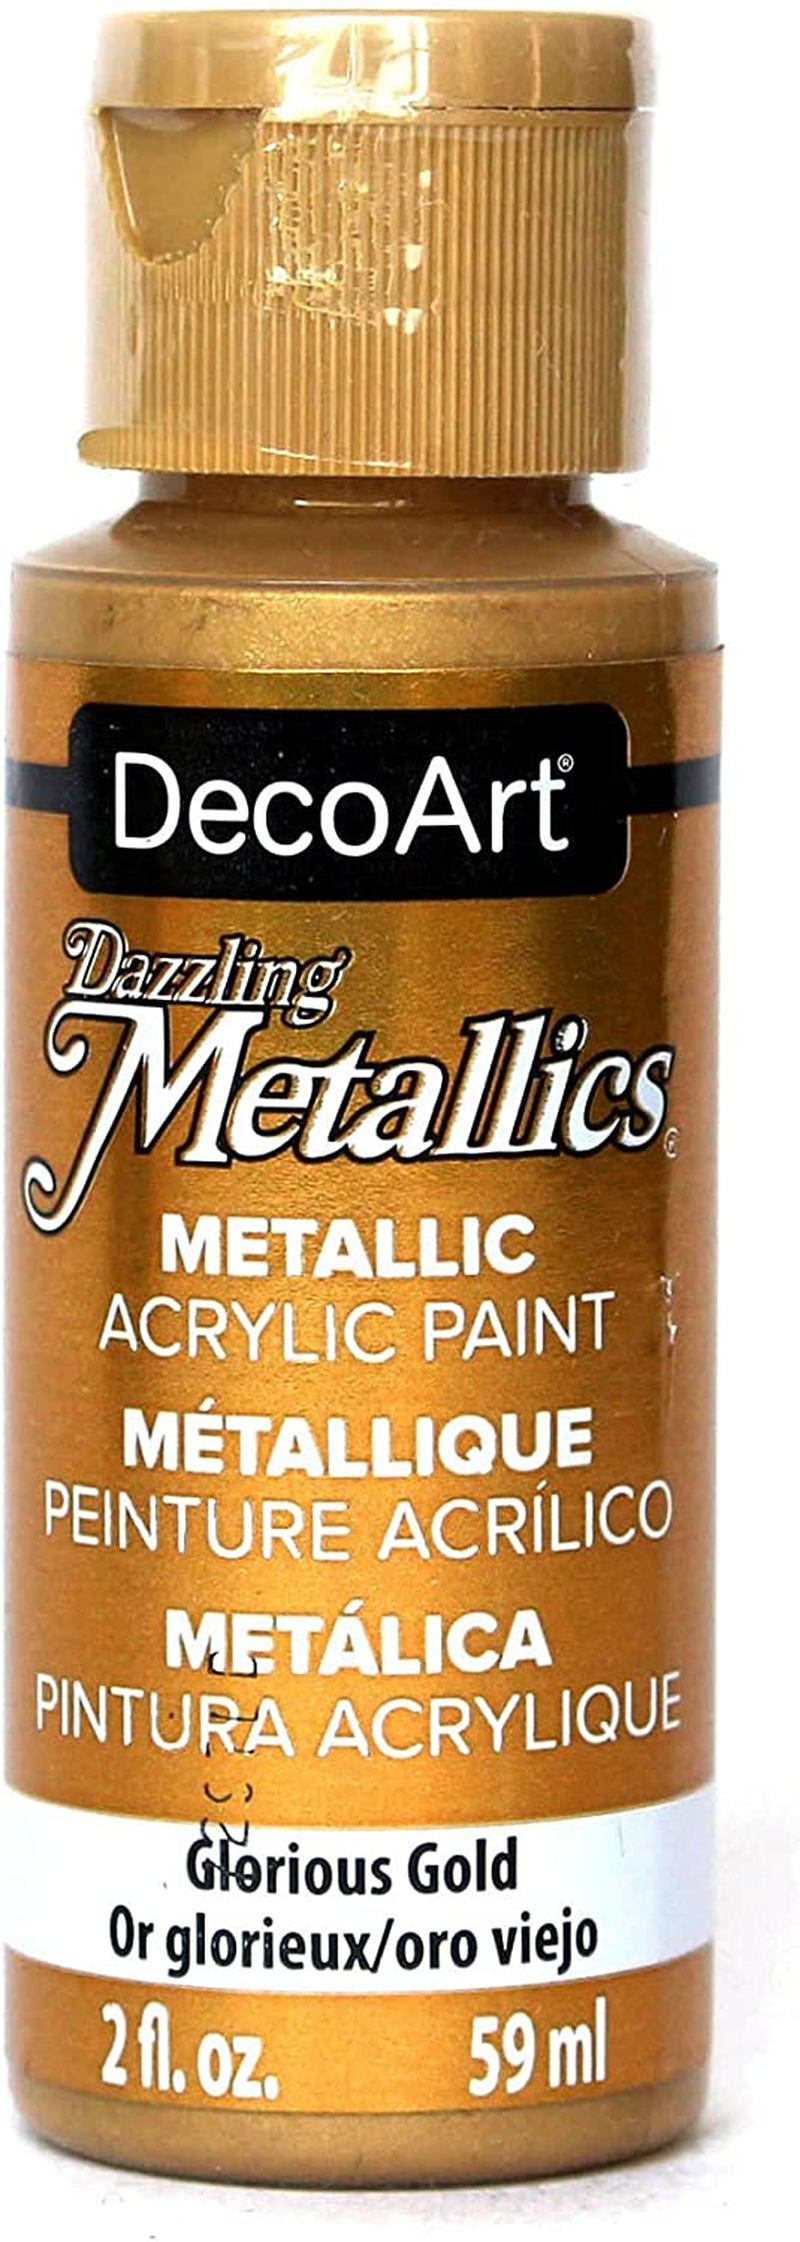 americana acrylic metallic paint, glorious gold, 59 ml (pack of 1)